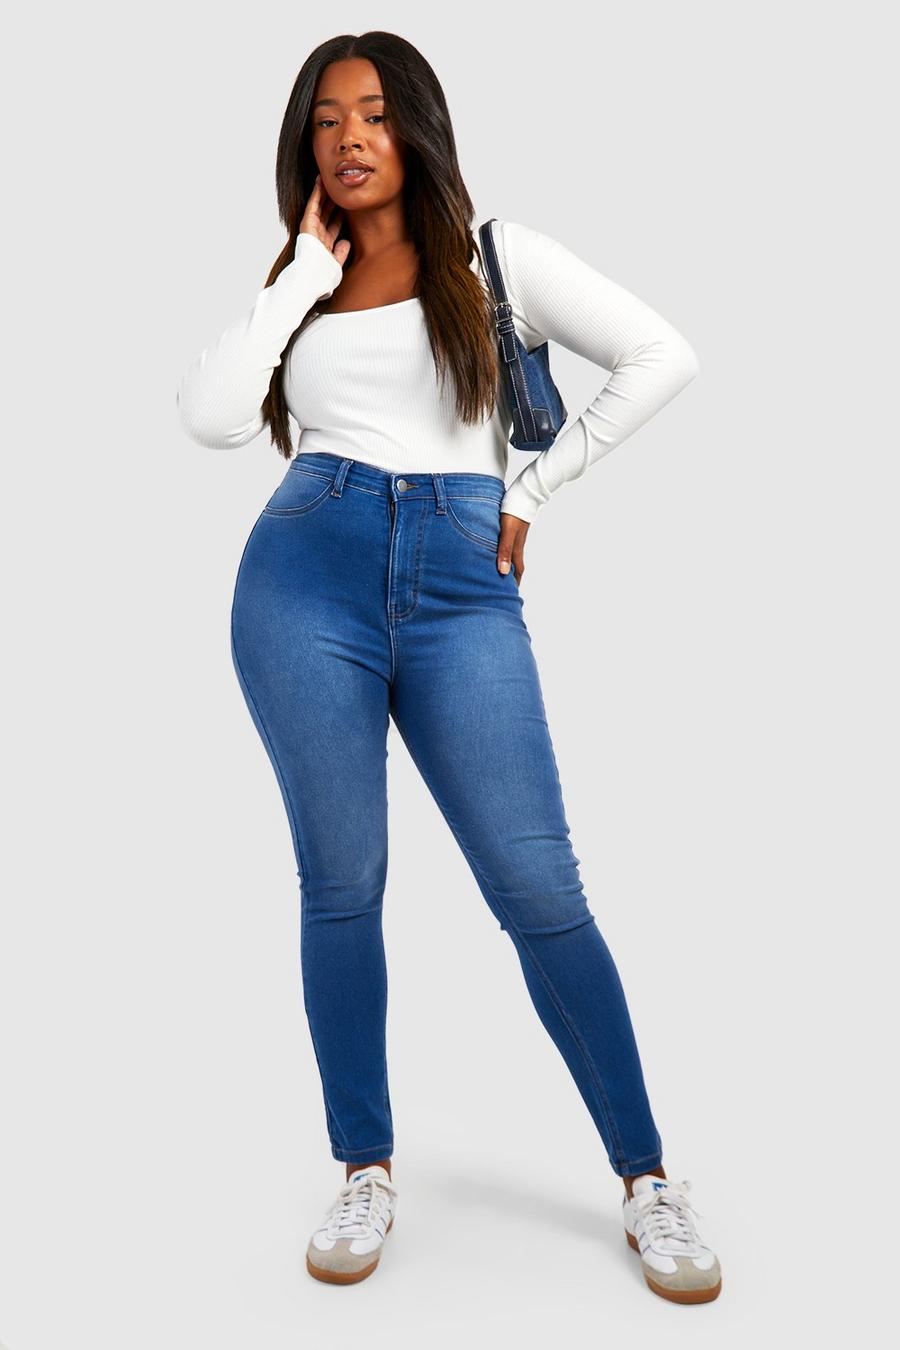 Sanviglor Ladies Printed Denim Jeggings Elastic Waisted Plus Size Look  Print Leggings Heart Fake Jeans Fruit Trousers Yoga Bottoms Light Blue 5XL